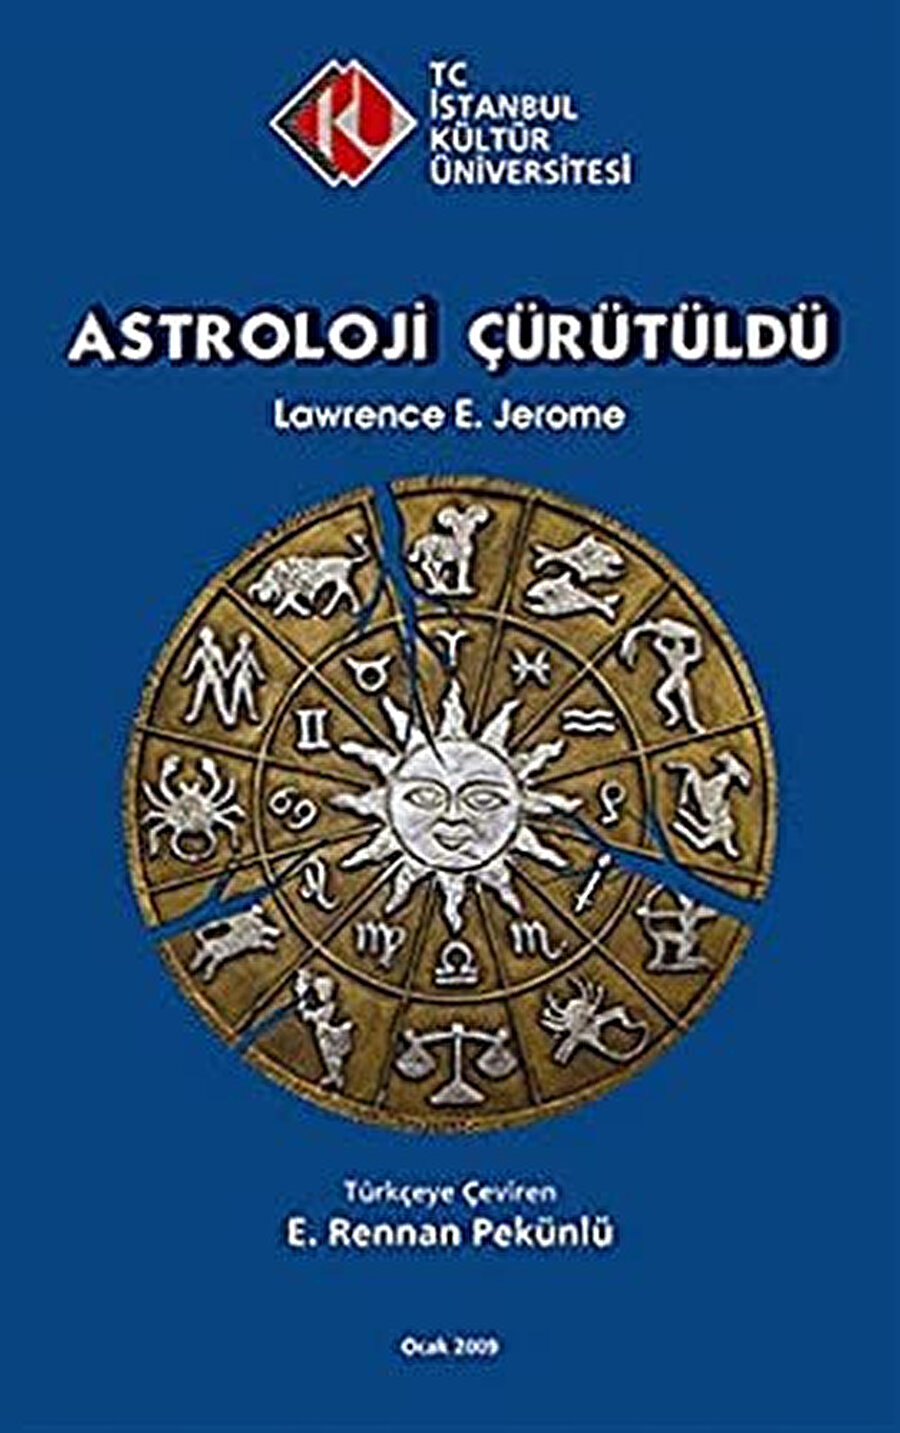 Lawrence E. Jerome de Astroloji Çürütüldü.